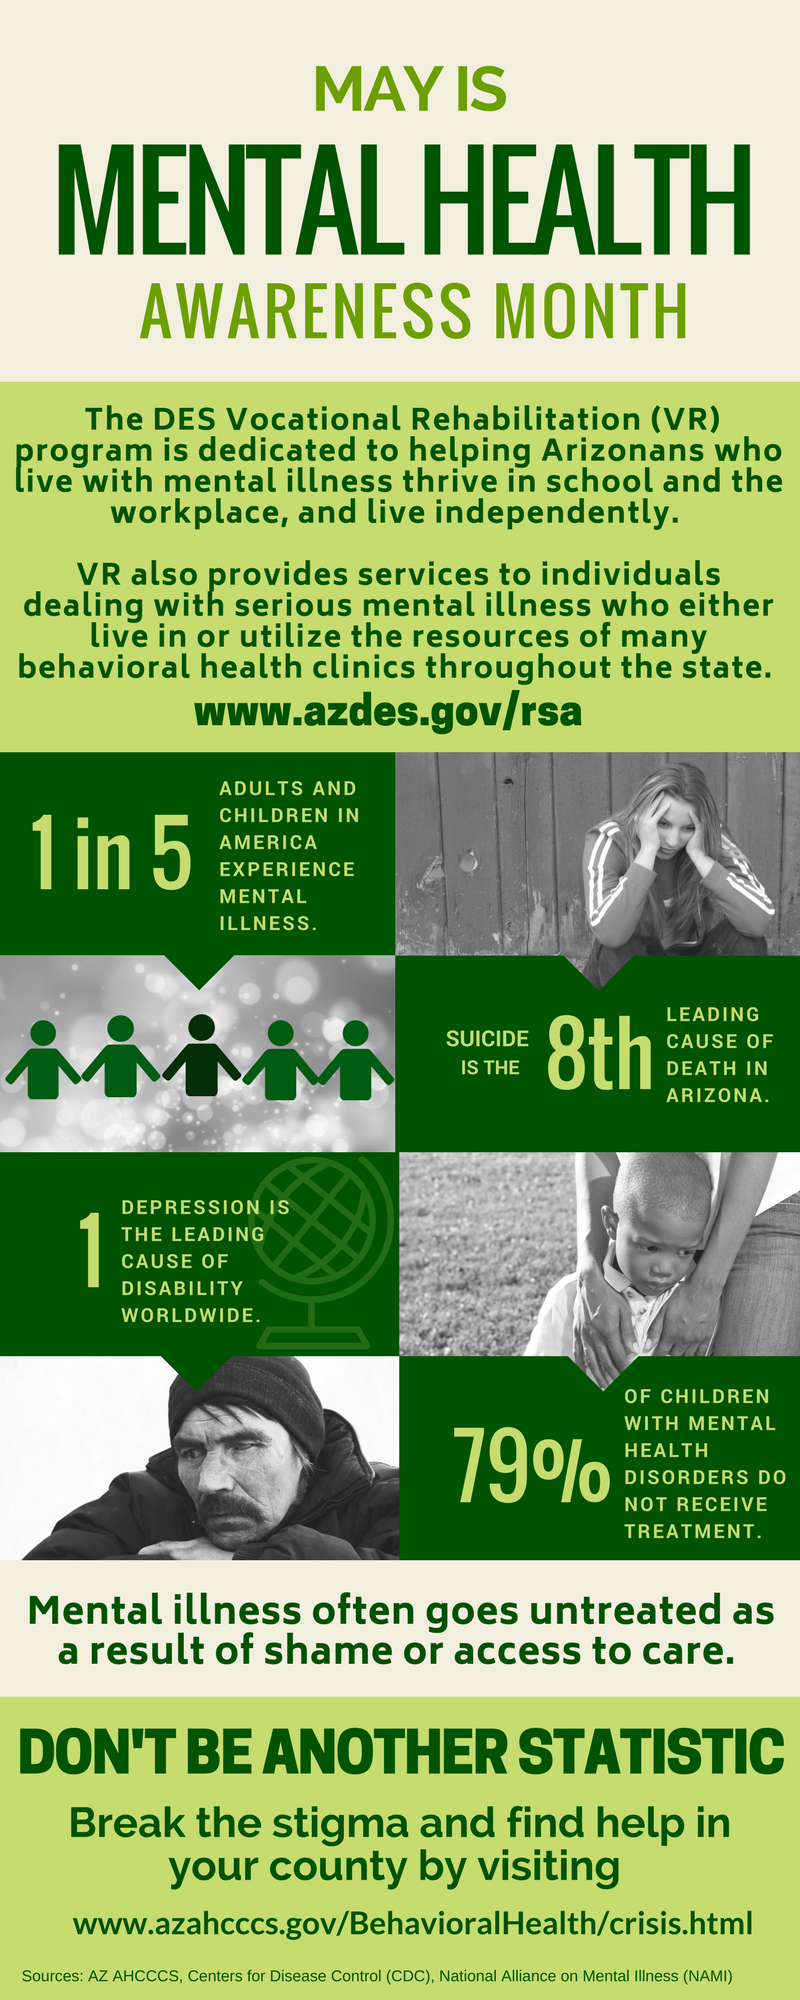 mental-health-awareness-month-arizona-department-of-economic-security